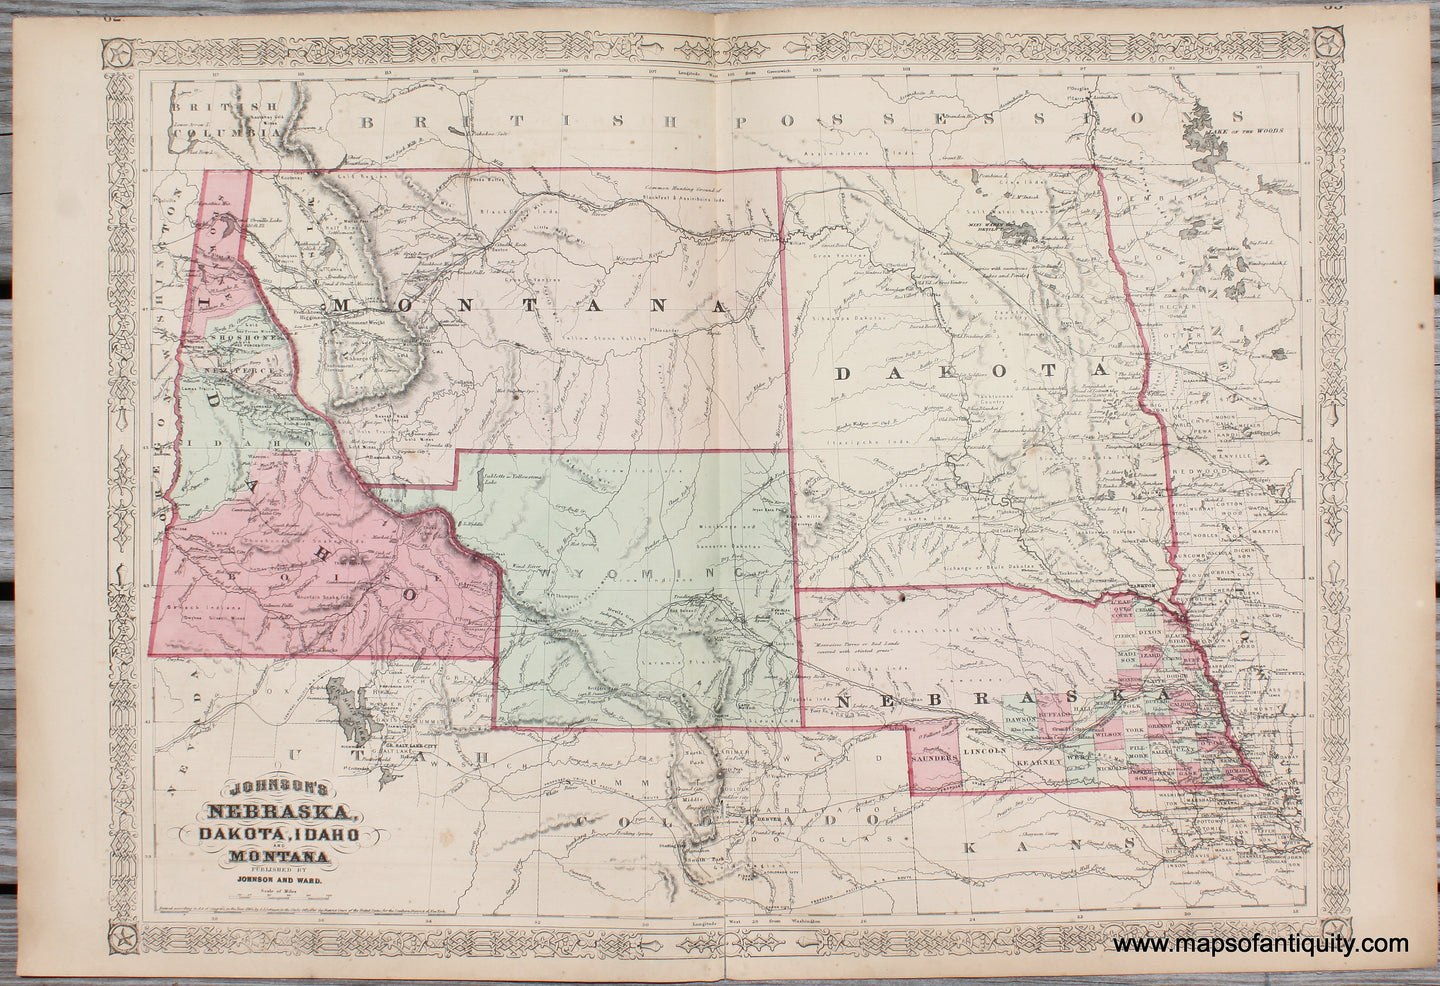 1866 - Johnson's Nebraska, Dakota, Idaho, and Montana - Antique Map